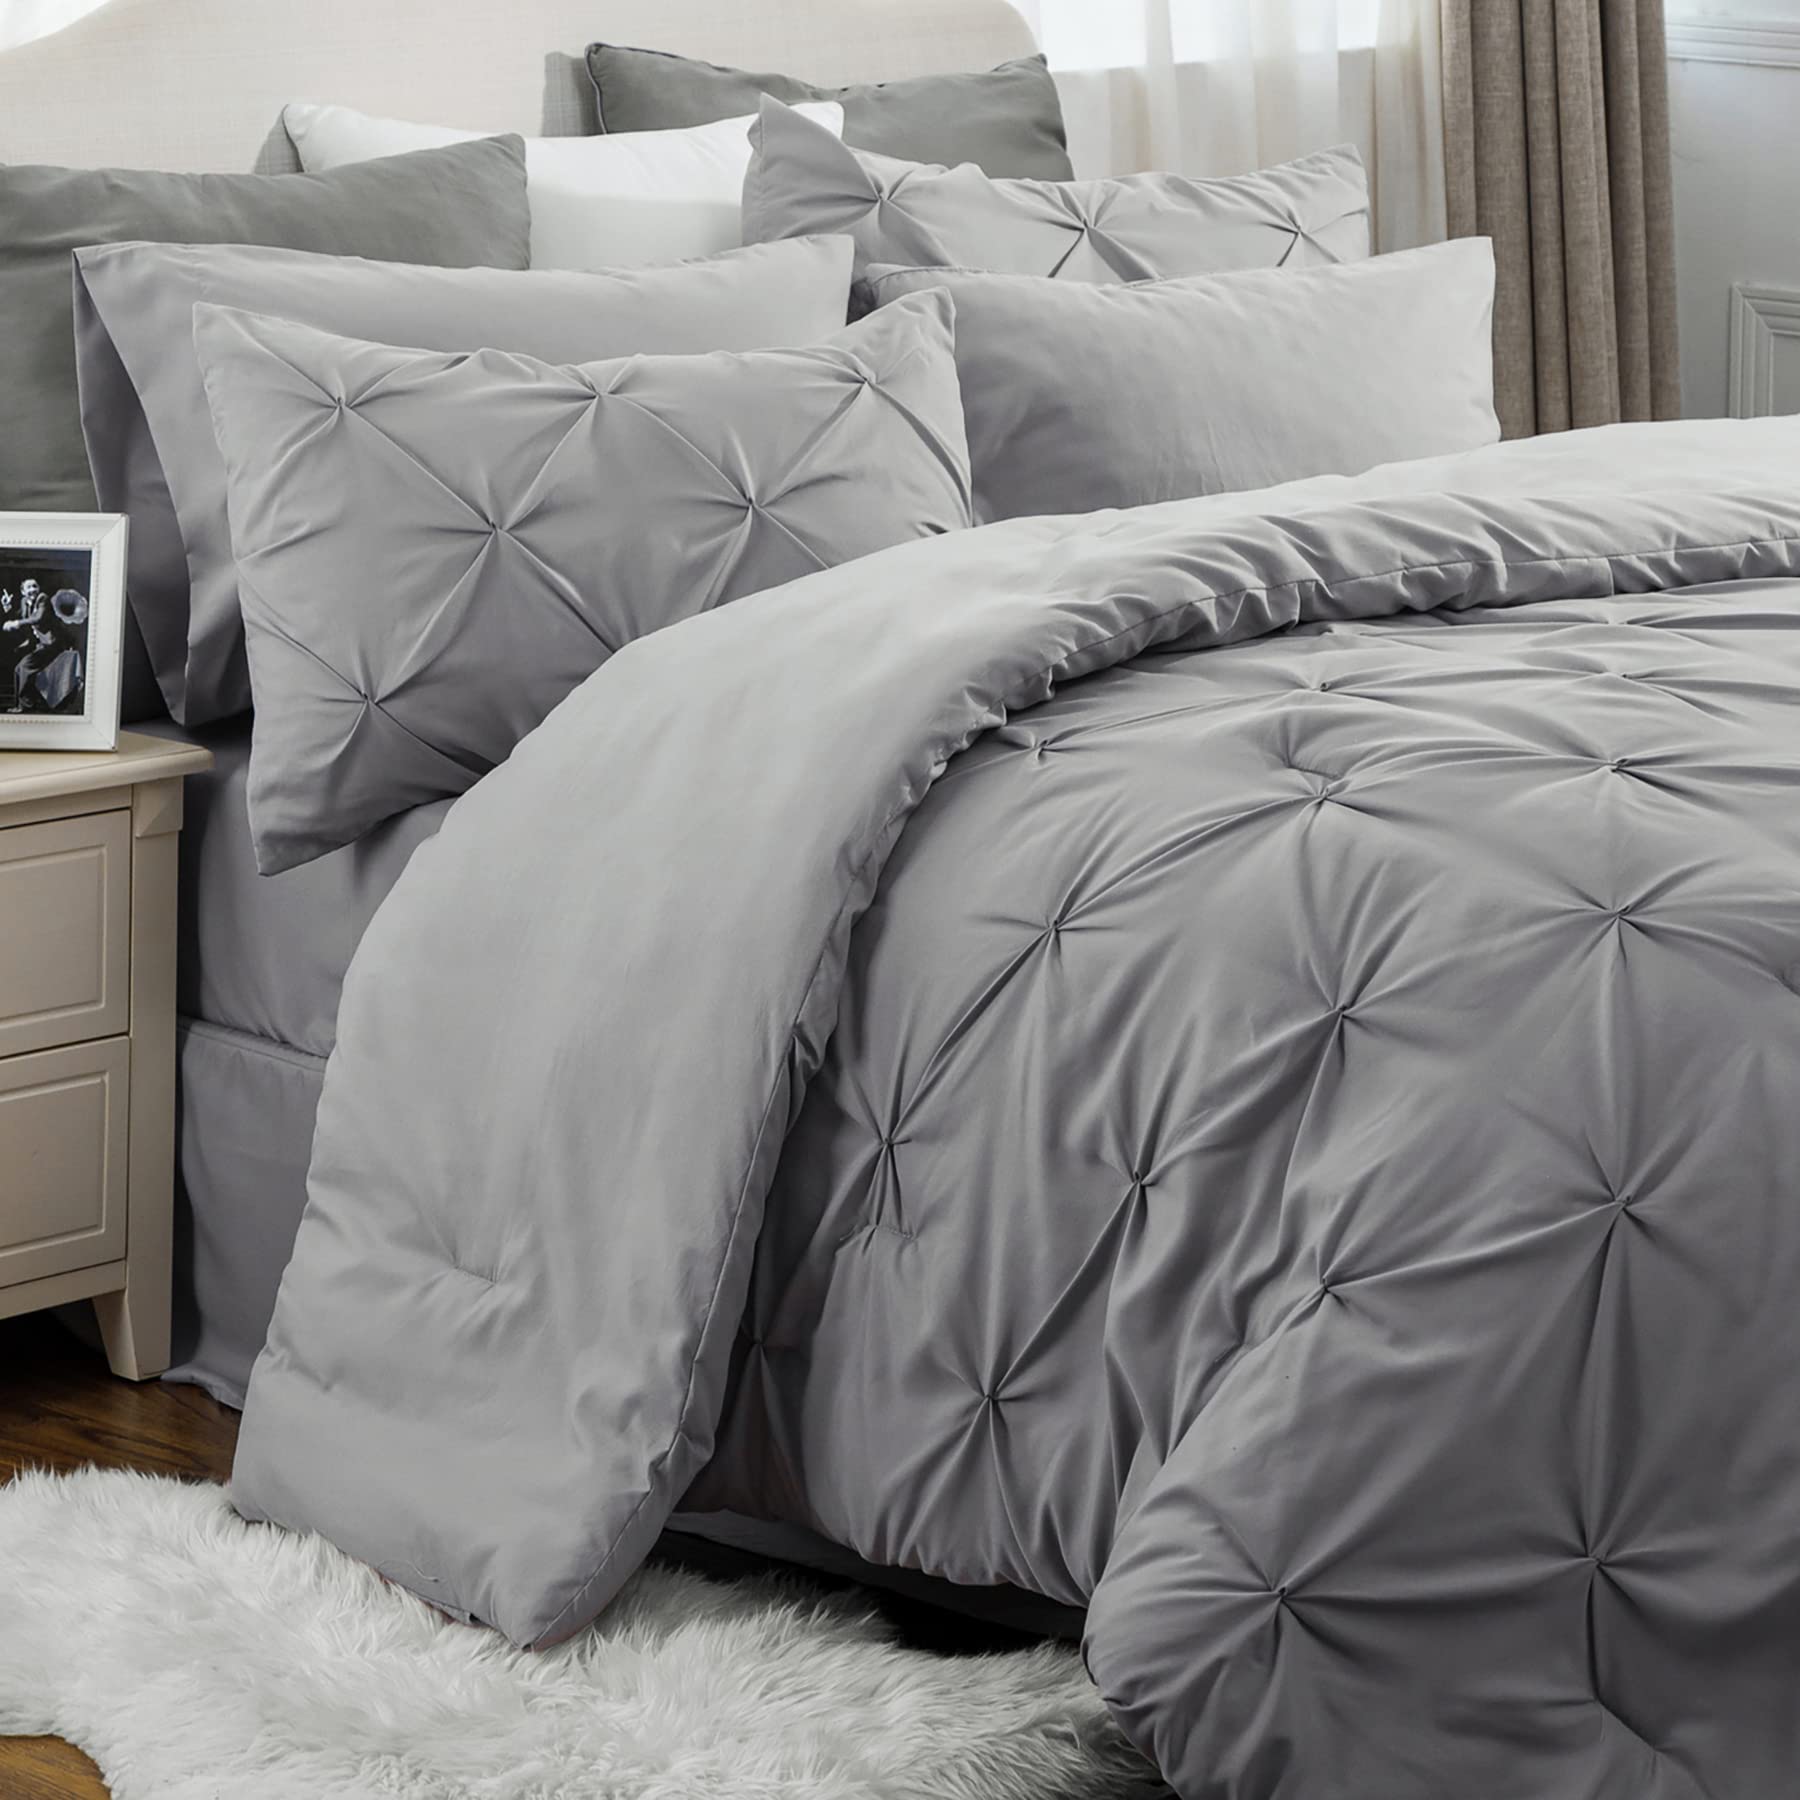 Bedsure Queen Comforter Set - 7 Pieces Comforters Queen Size Grey, Pintuck Bedding Sets Queen for All Season, Bed in a Bag with 